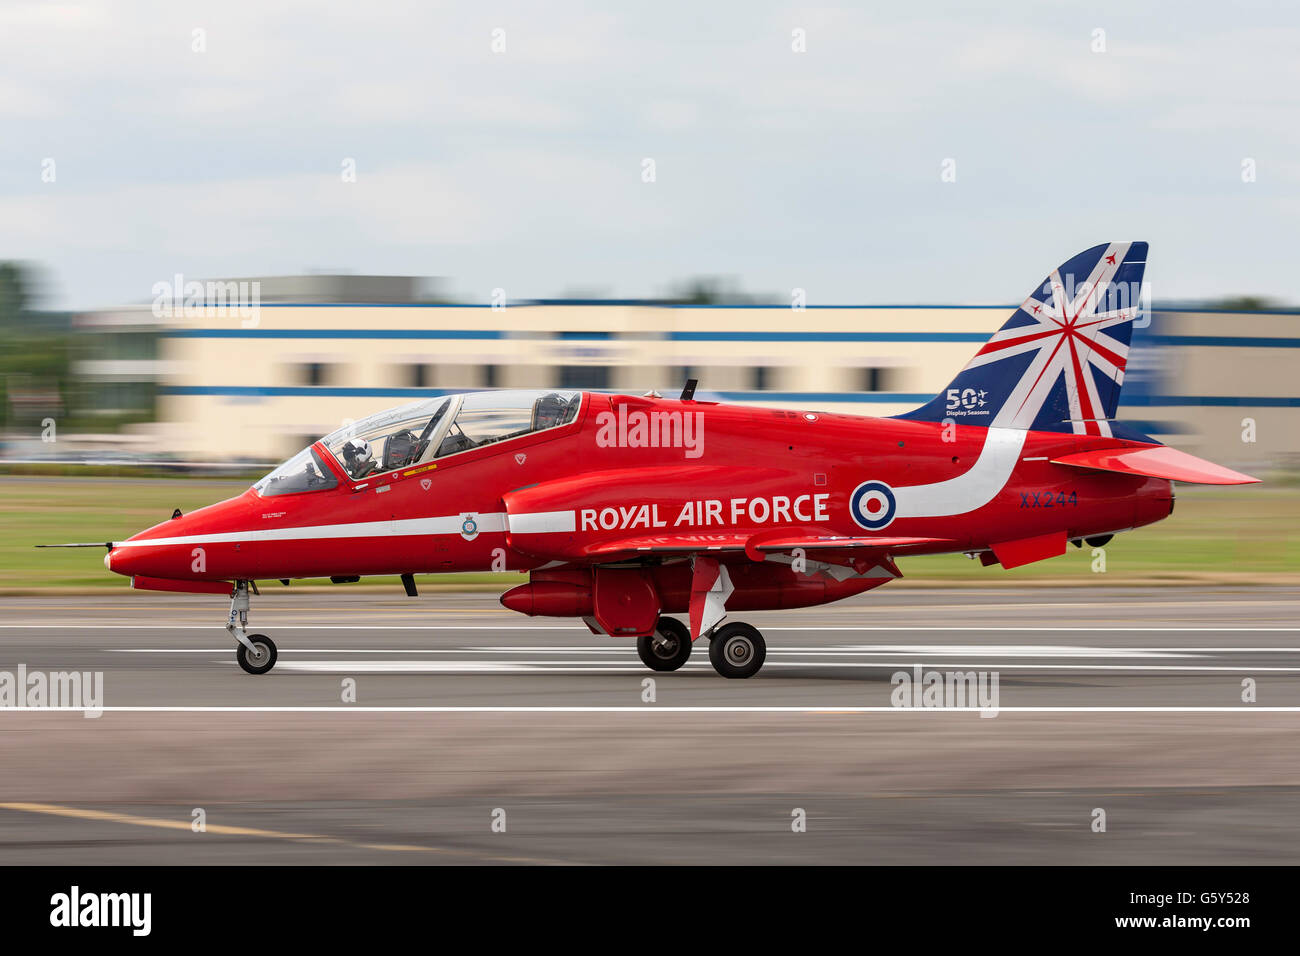 Royal Air Force (RAF) flèches rouges aerobatic display team performing au Farnborough International Airshow Banque D'Images